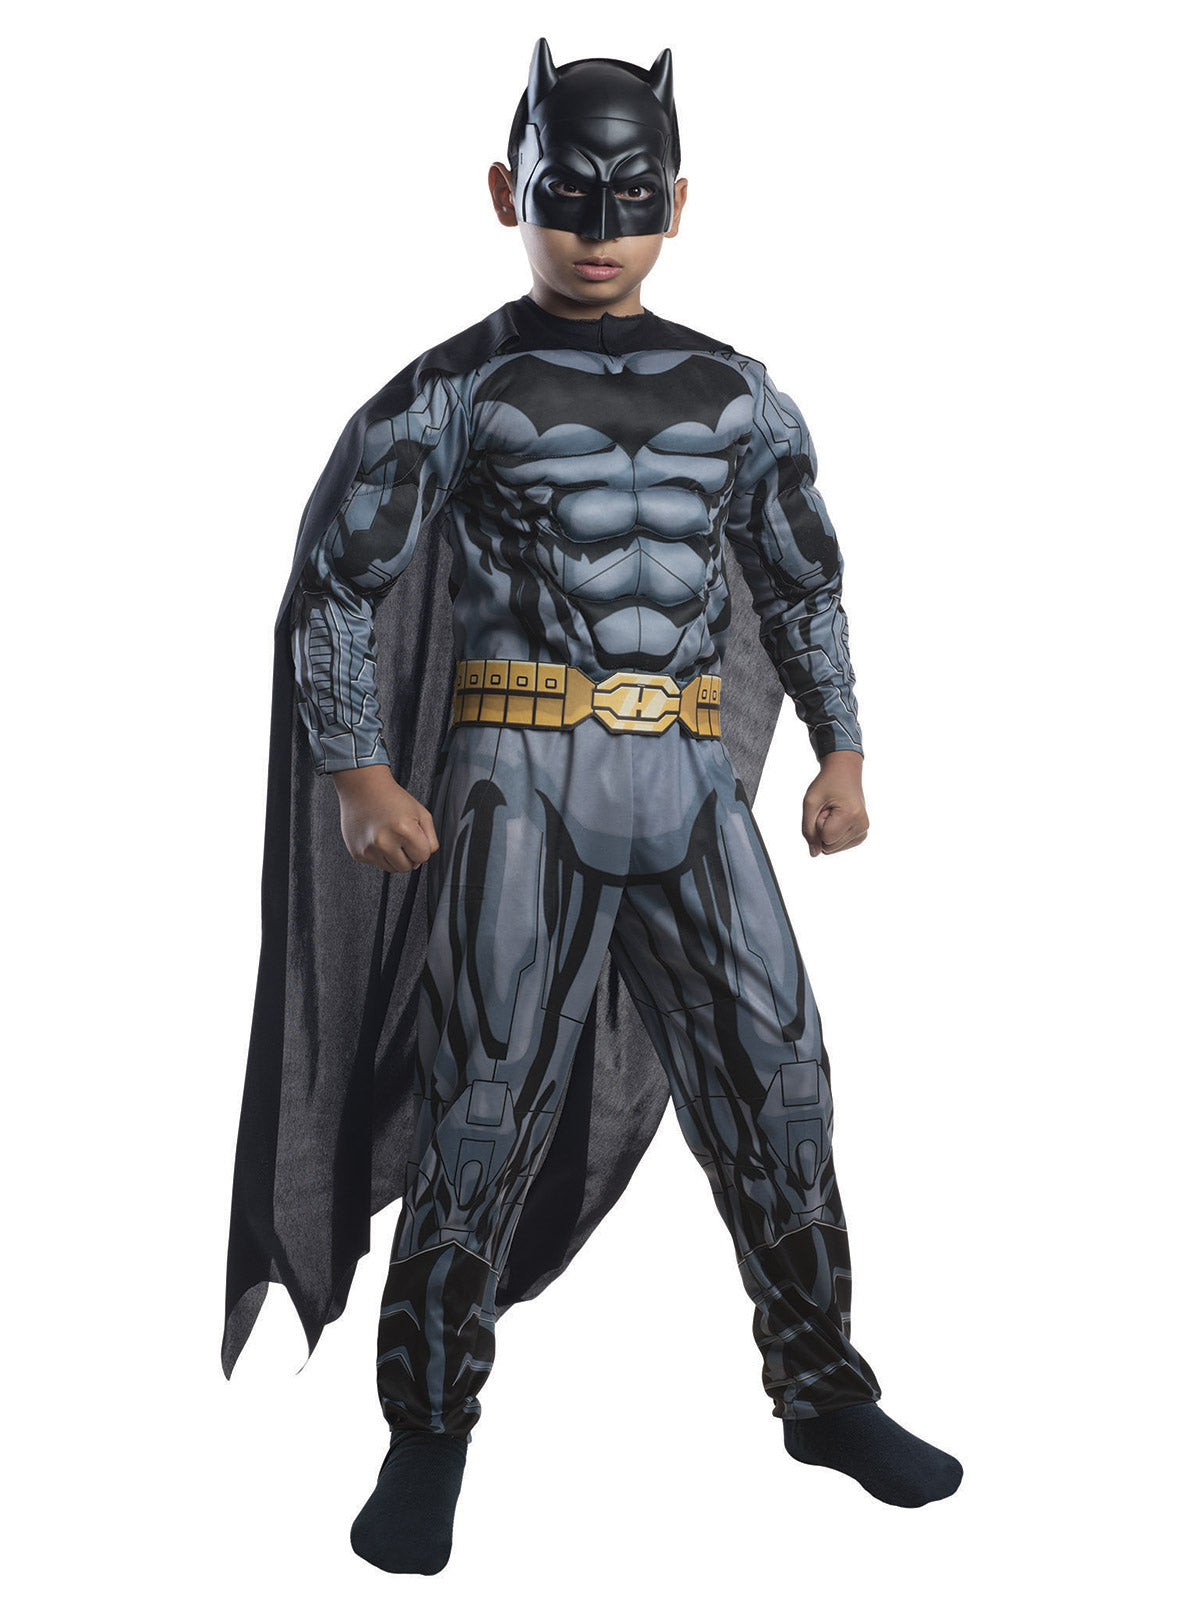 Batman Digital Print Boys Deluxe Child Costume Licensed DC Comics